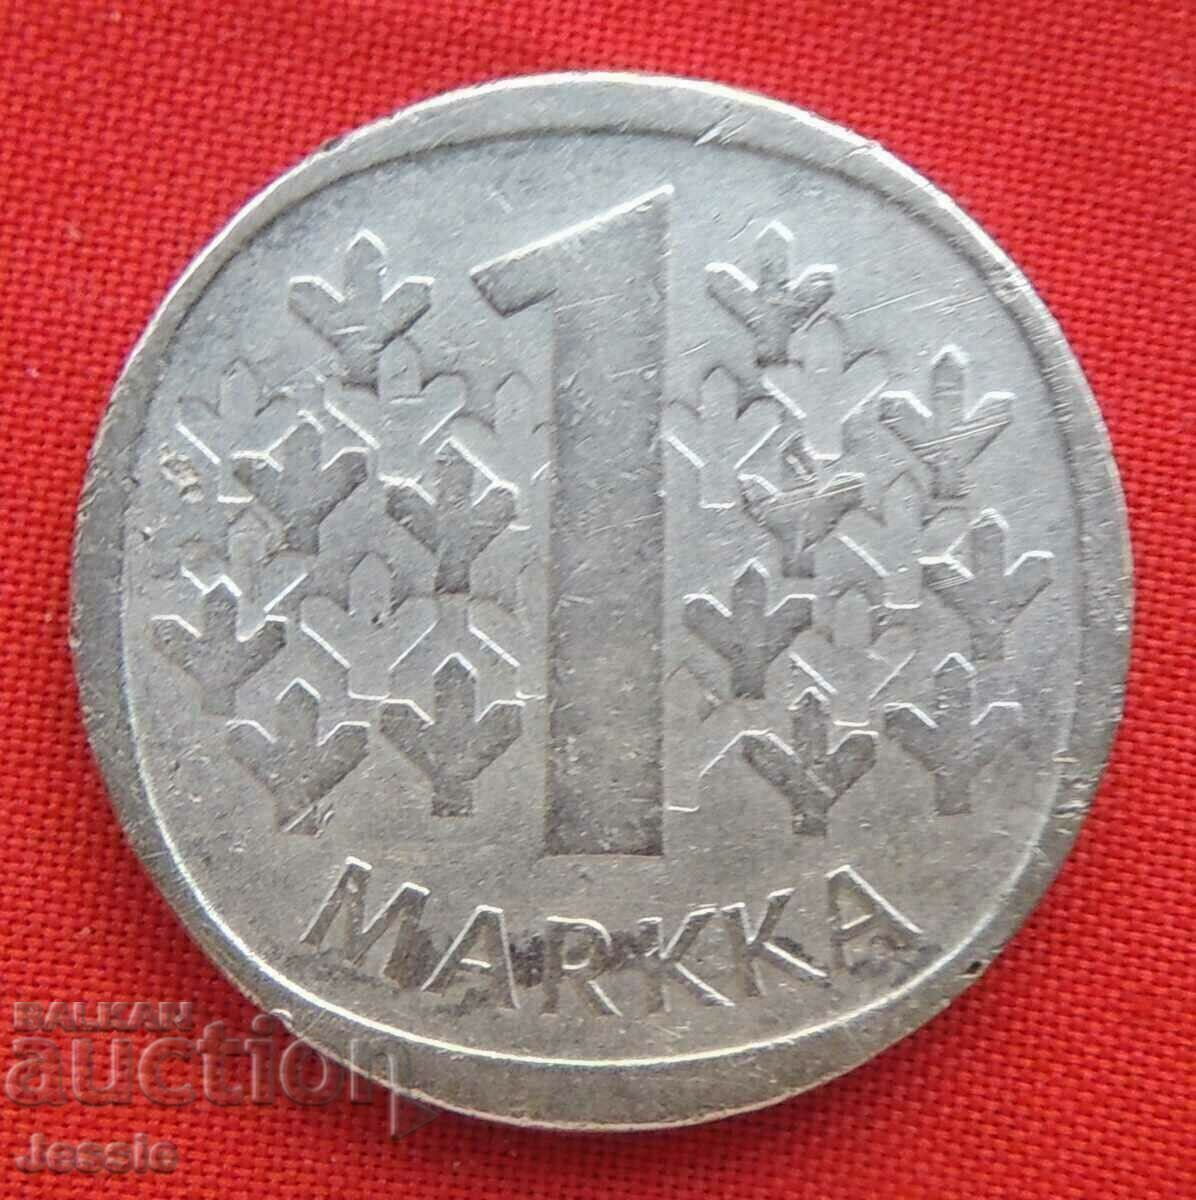 1 Mark 1966 silver